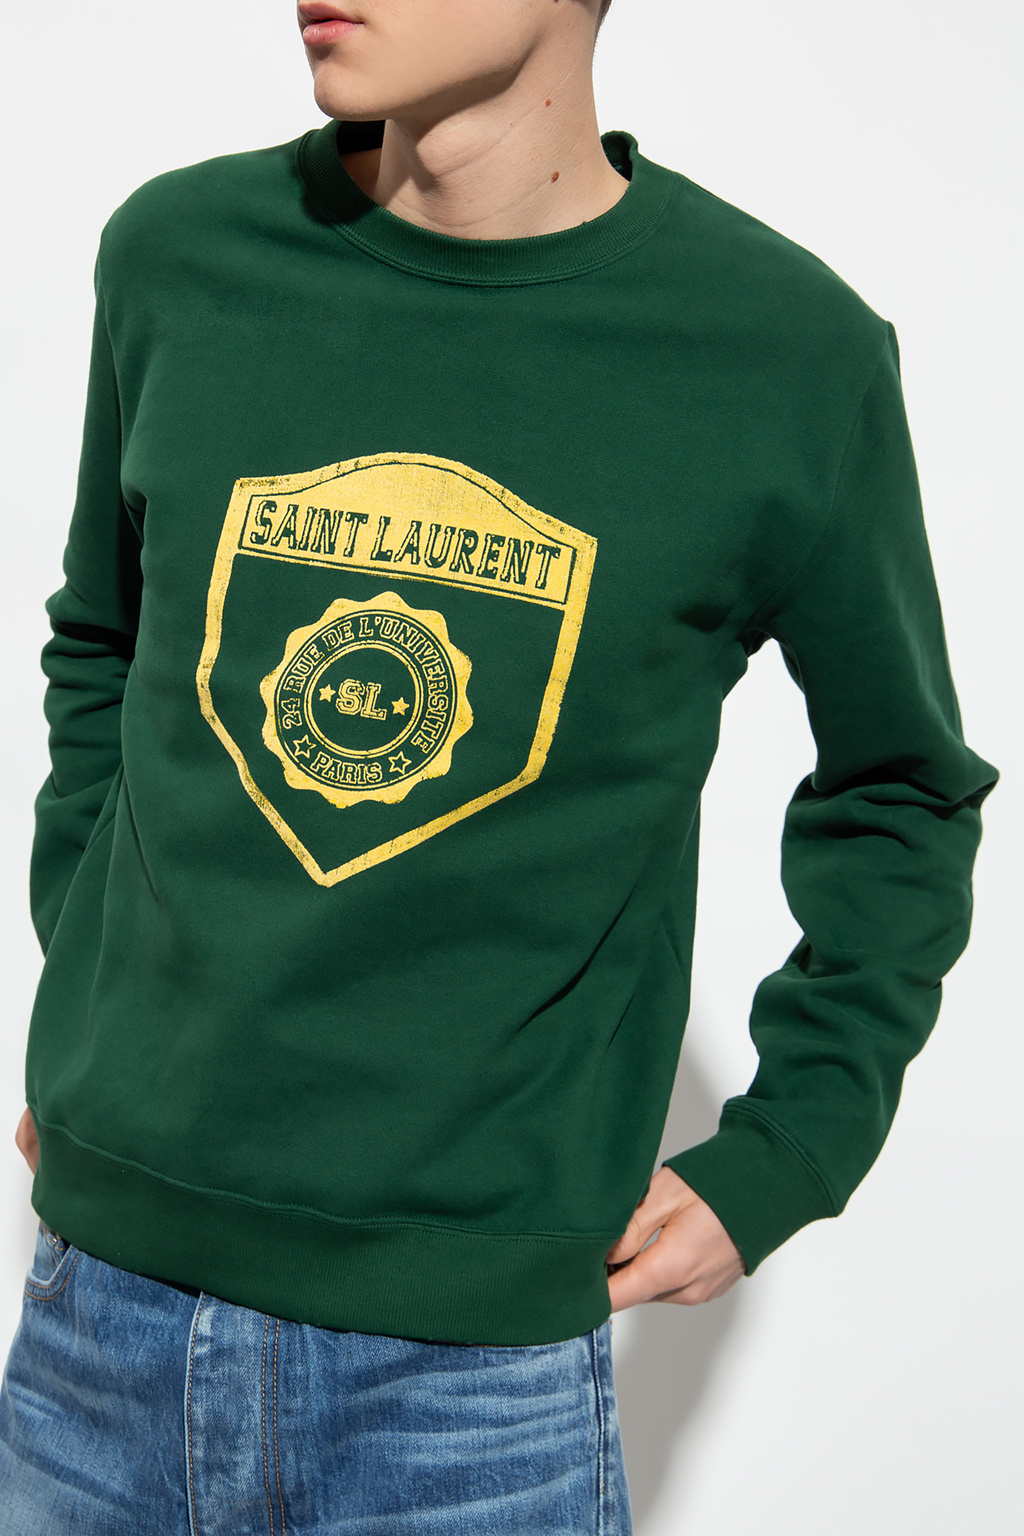 Saint Laurent Sweatshirt with print